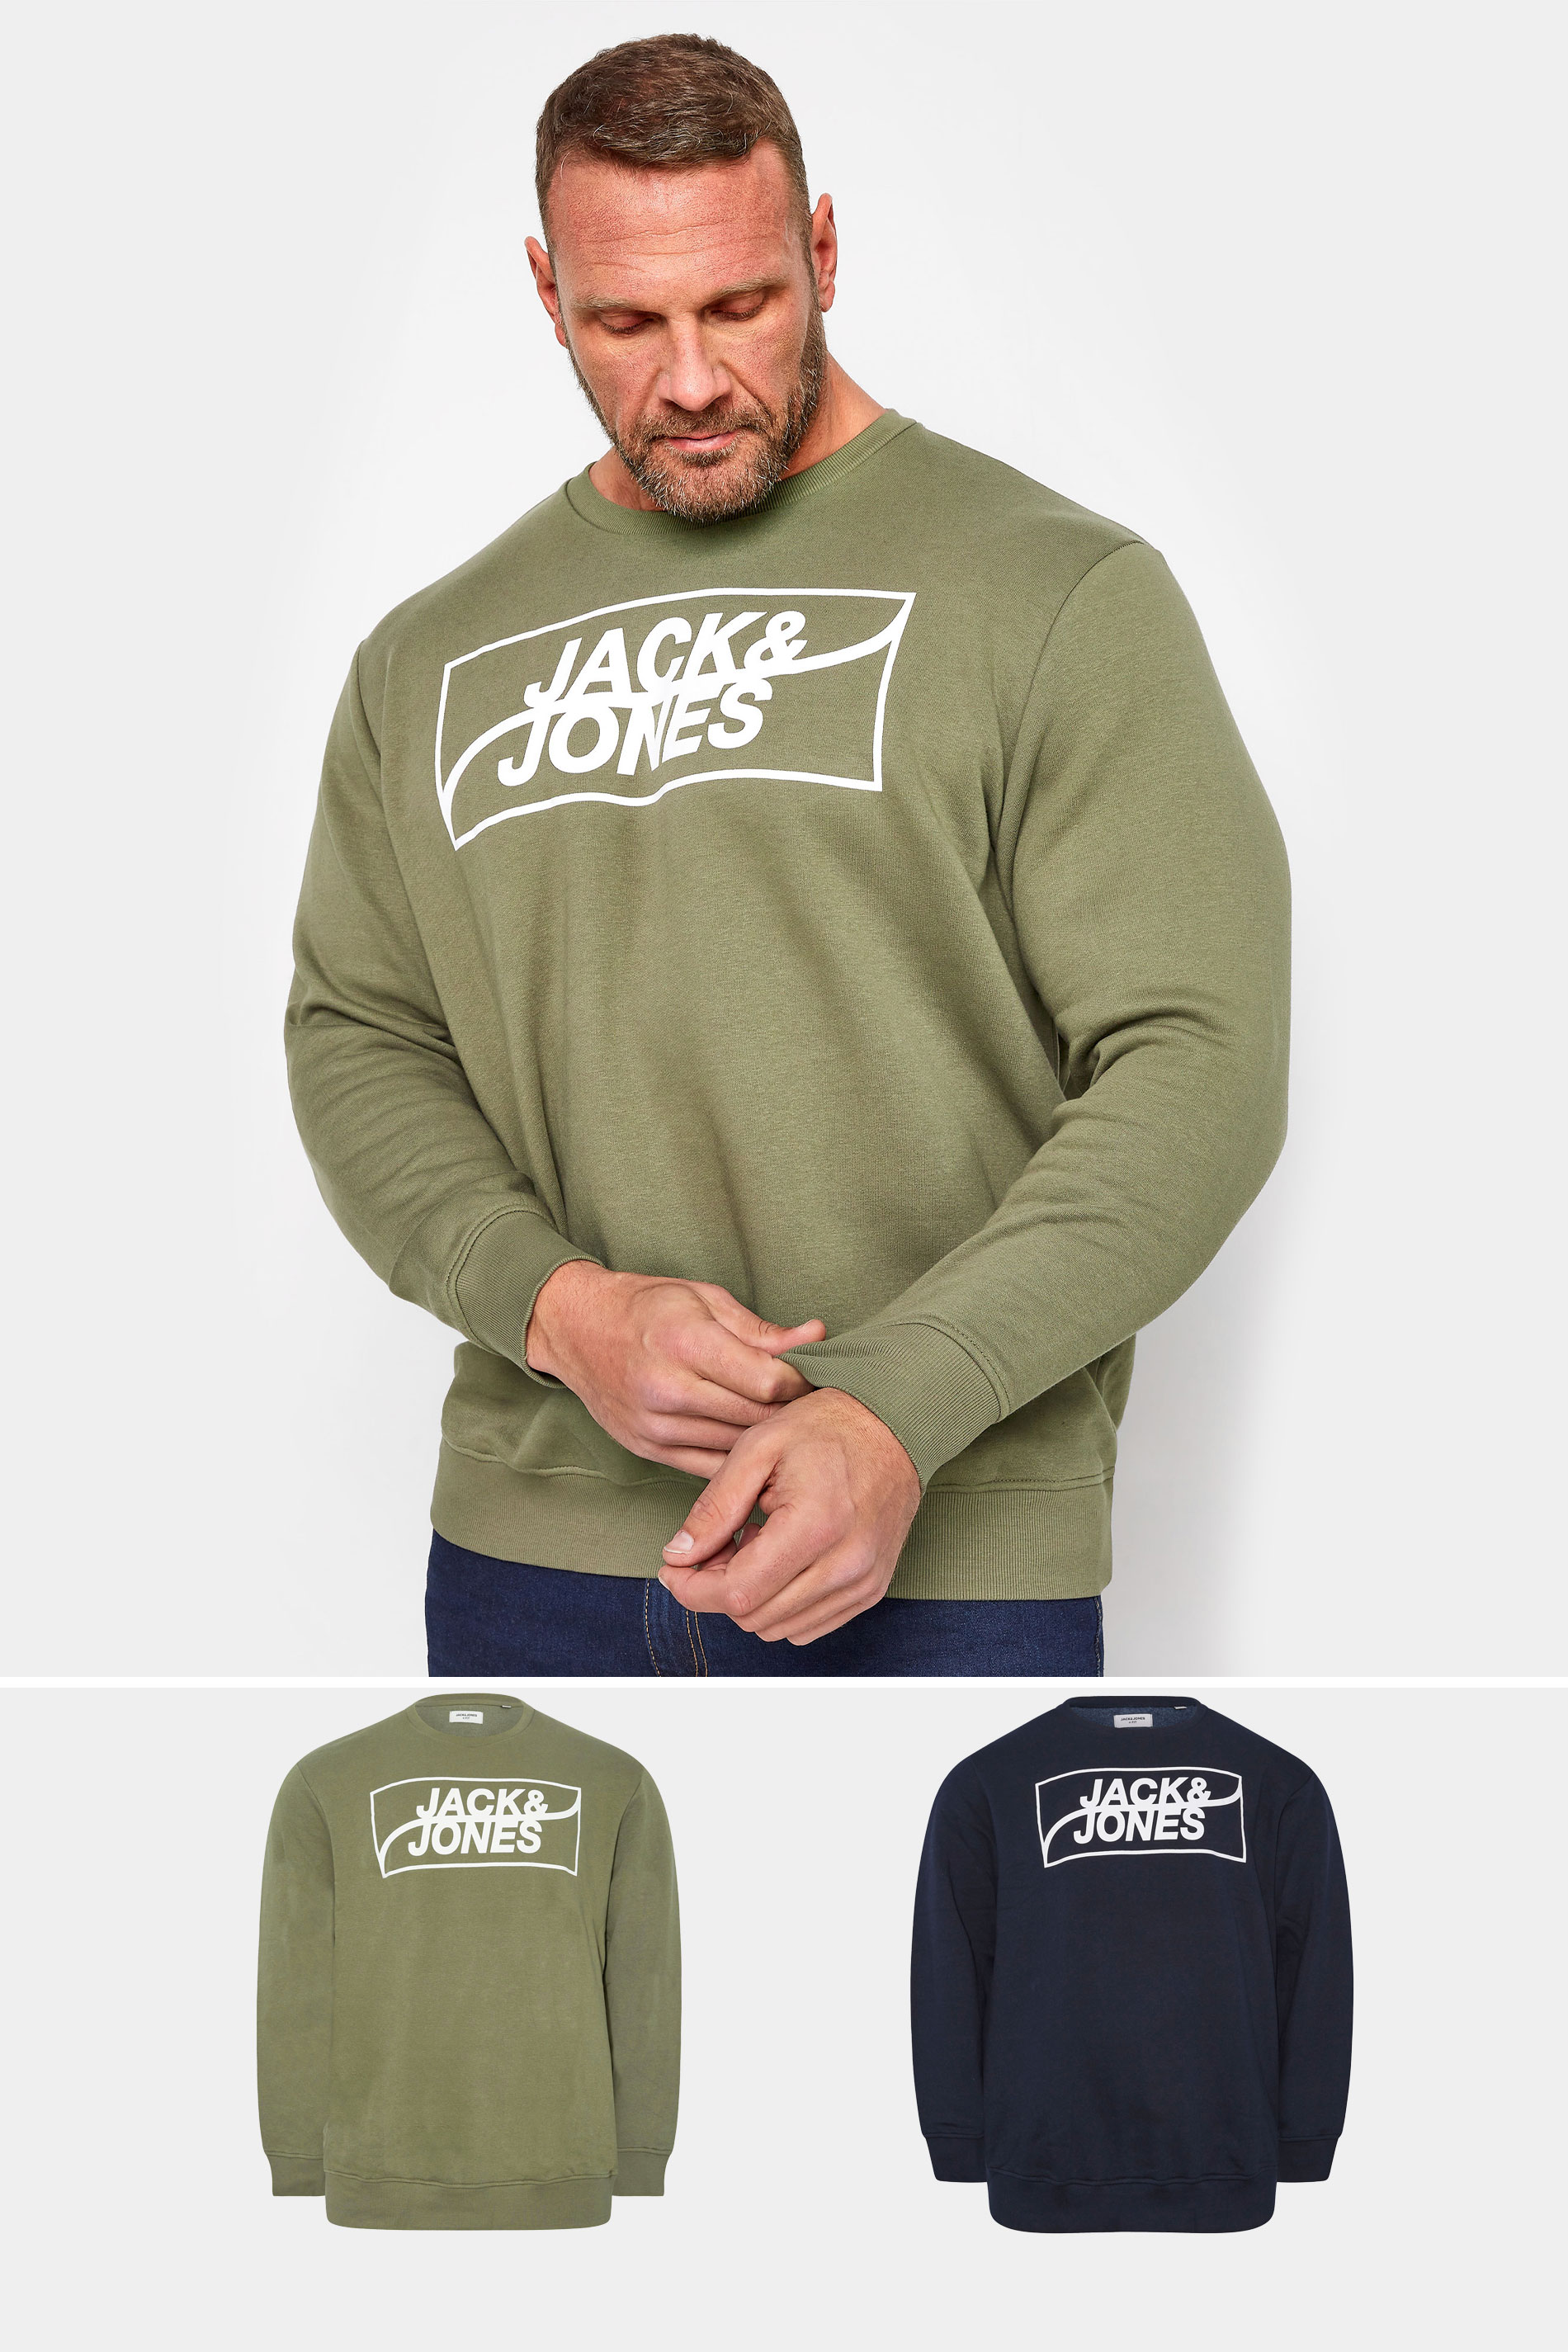 JACK & JONES 2 PACK Navy Blue & Khaki Green Logo Sweatshirts | BadRhino 1